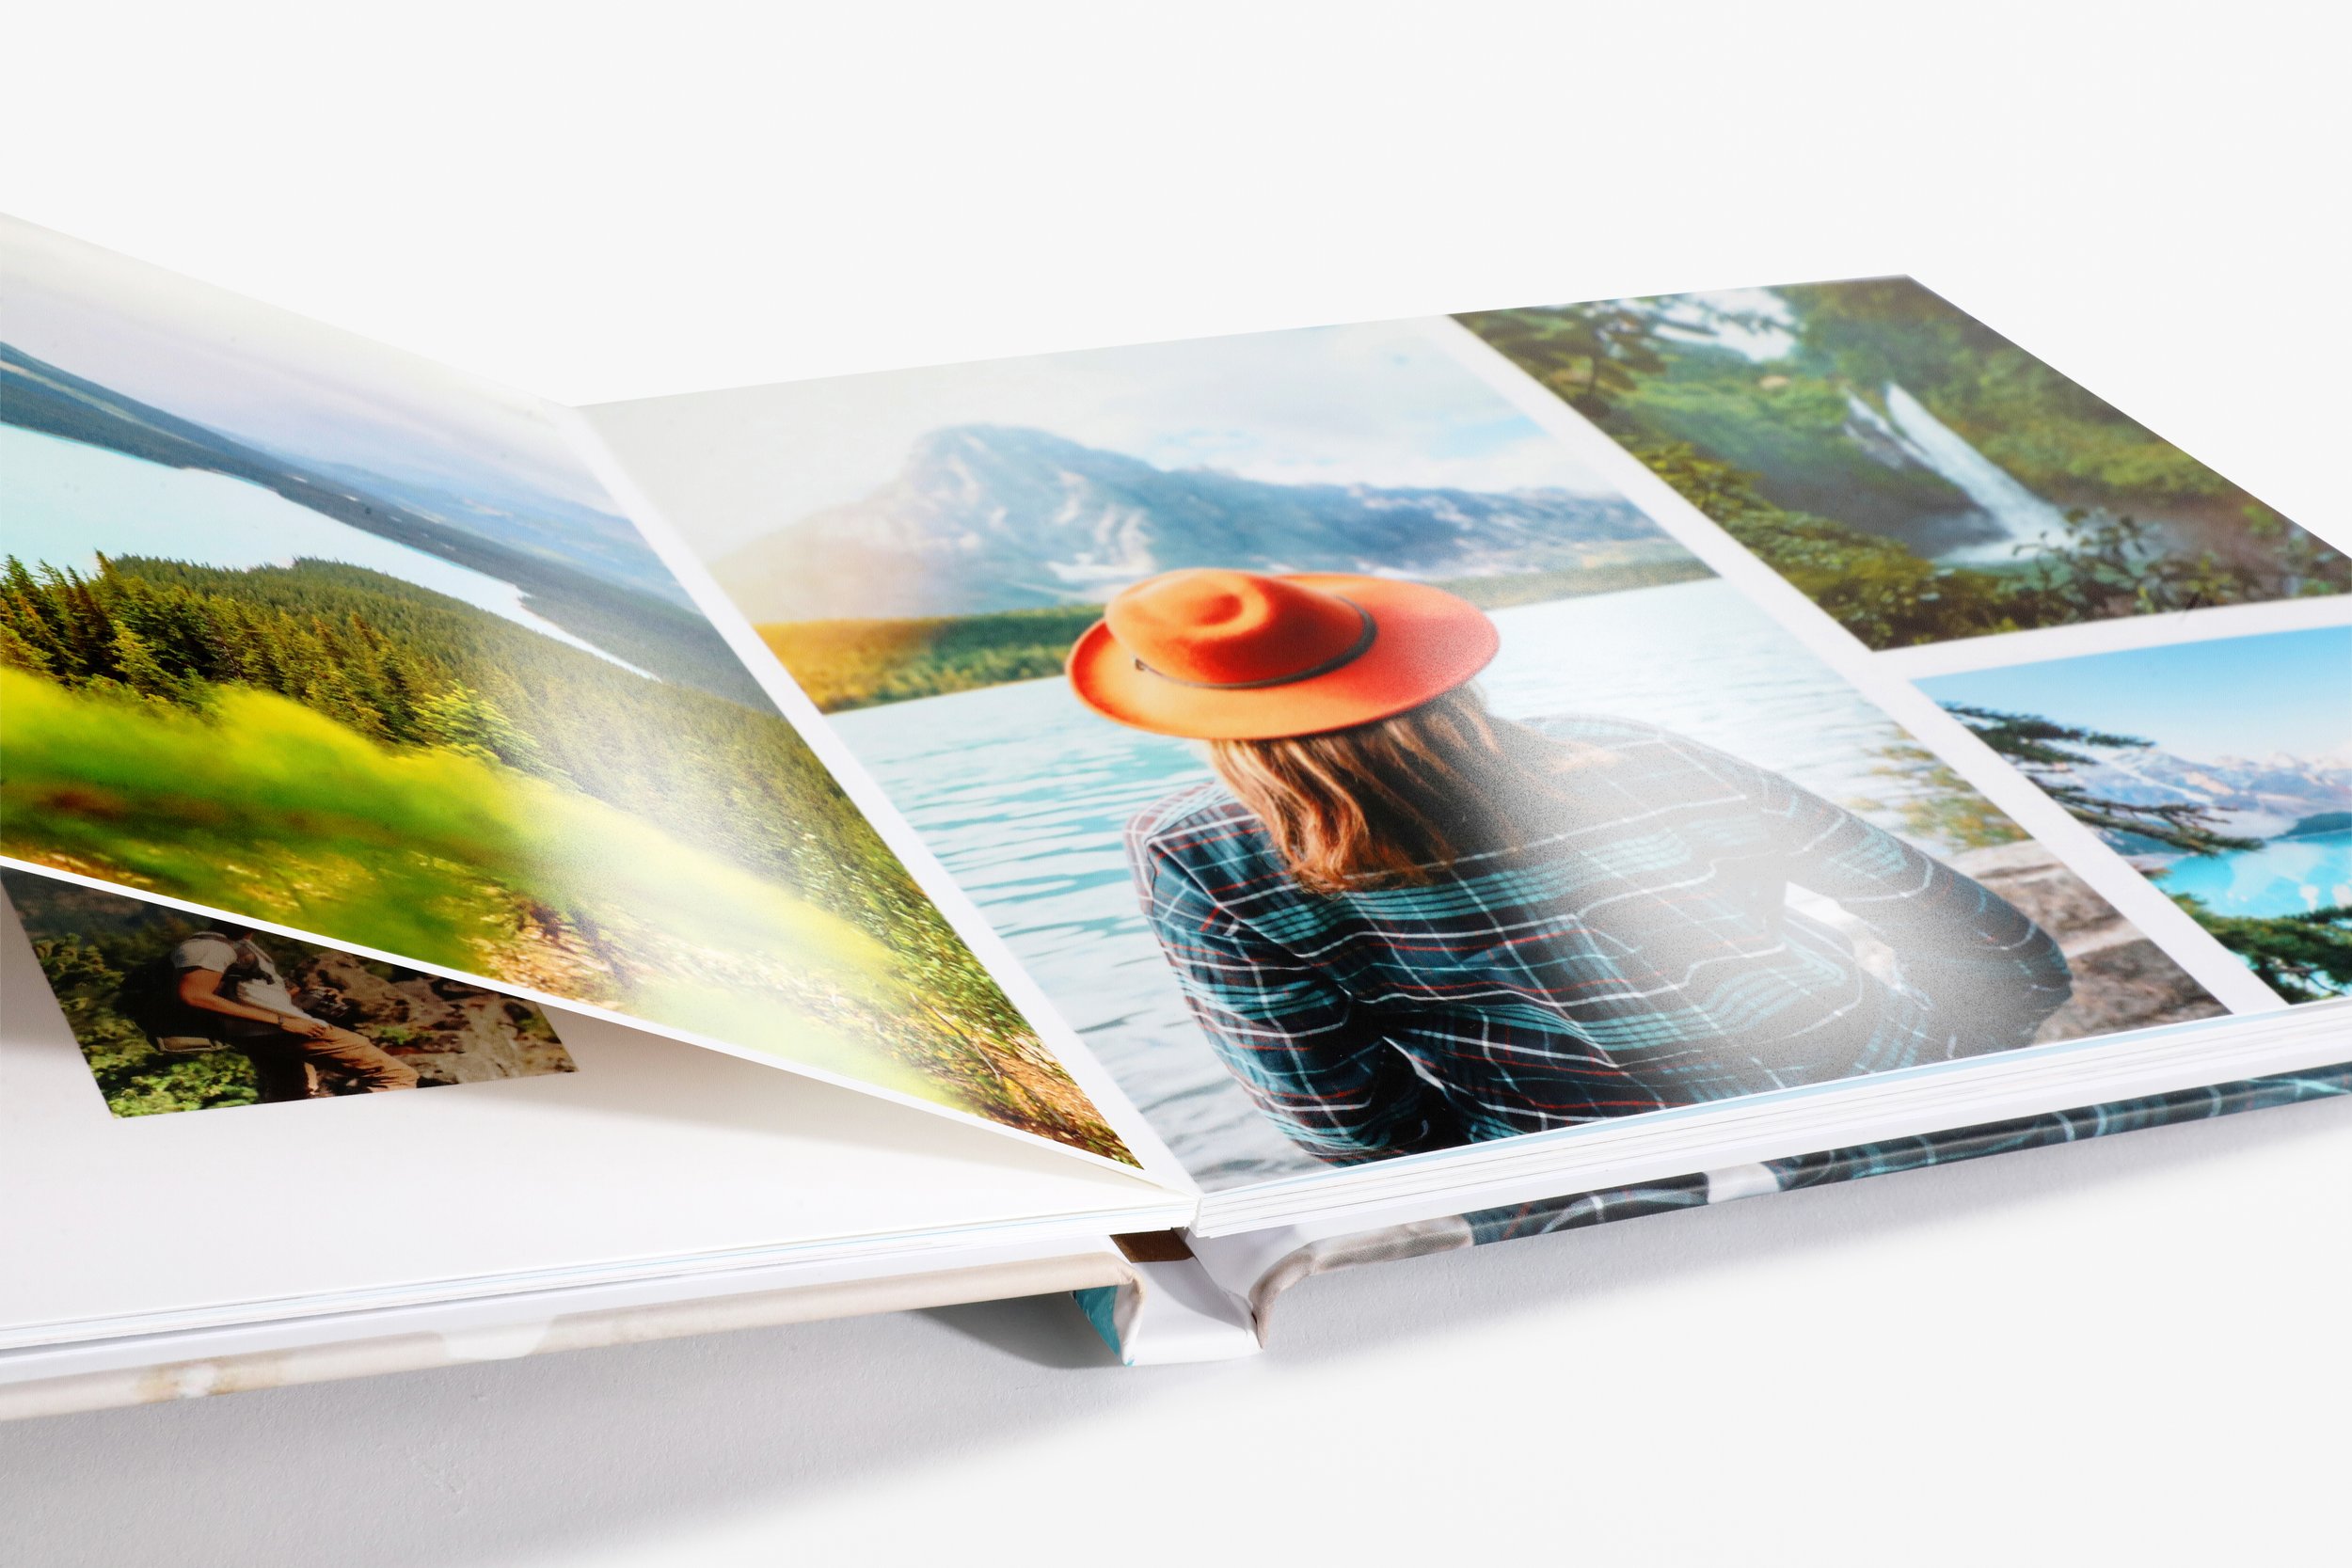 Our Adventure Book Photo Album Engraved Wood Cover, Photo Adventure Book,  Polaroid Instax Memories Book, Couples Adventure Scrap Book – Shiande  Creations